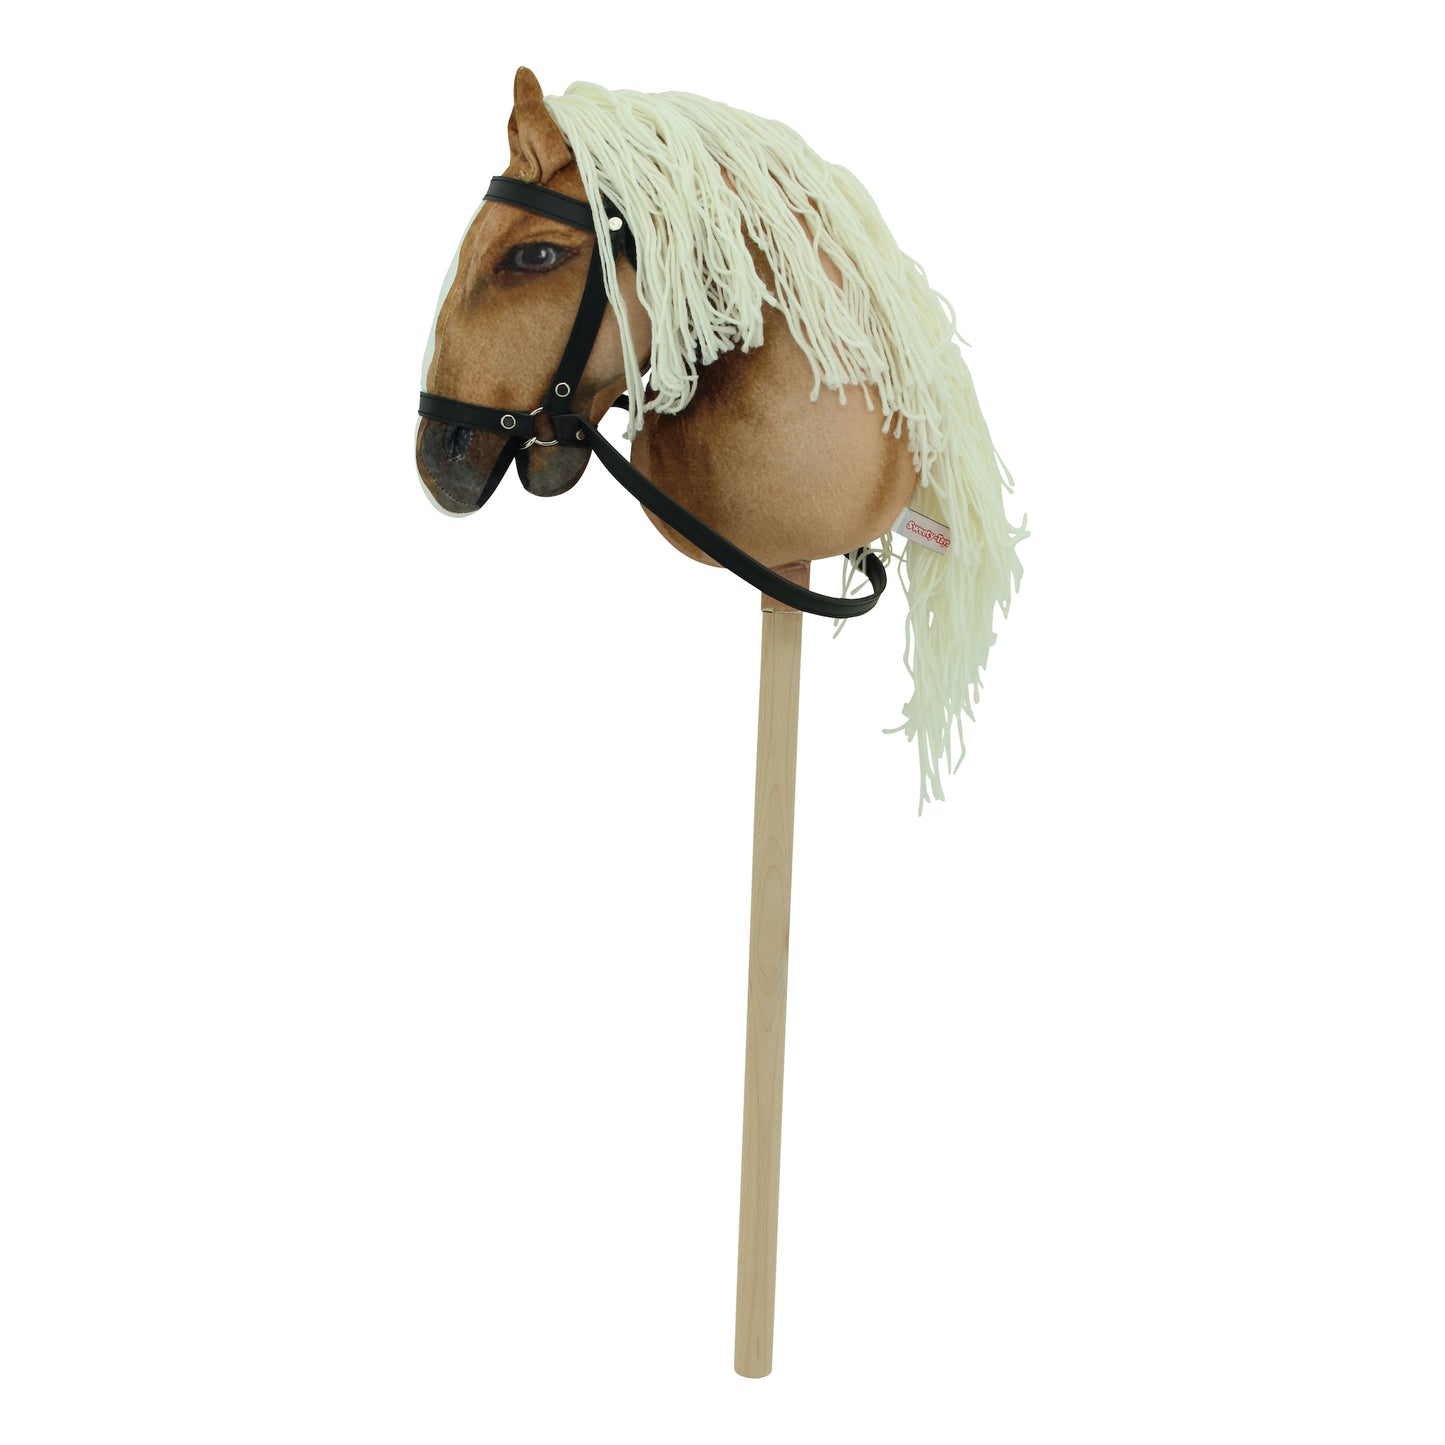 Sweety Toys 14248 Hobbyhorse Hobby horse senza ruote adatto per tornei